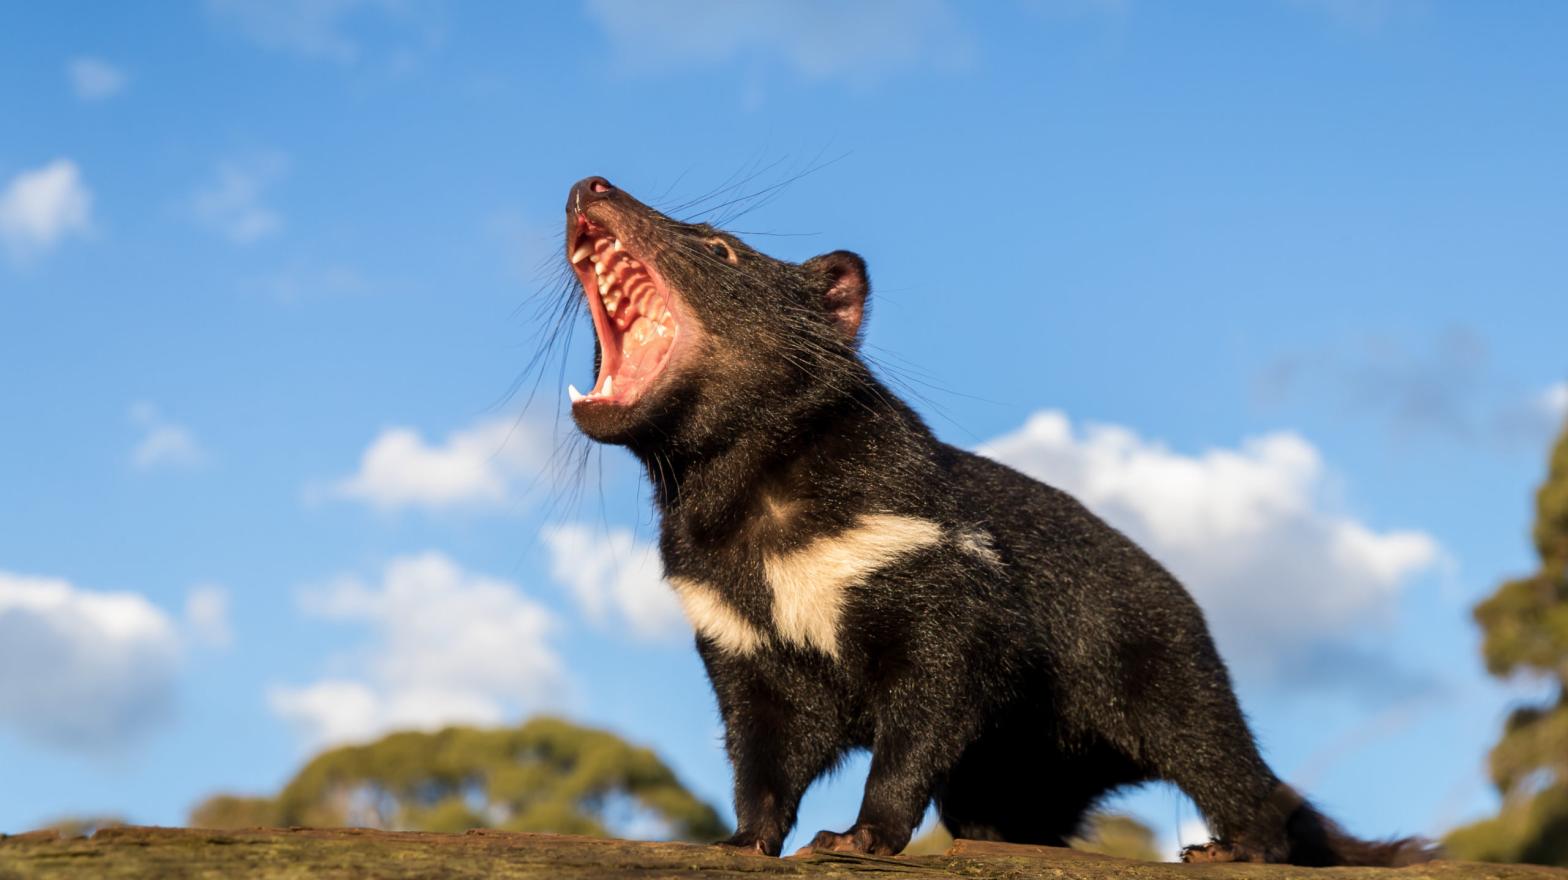 He scream. (Photo: Aussie Ark)